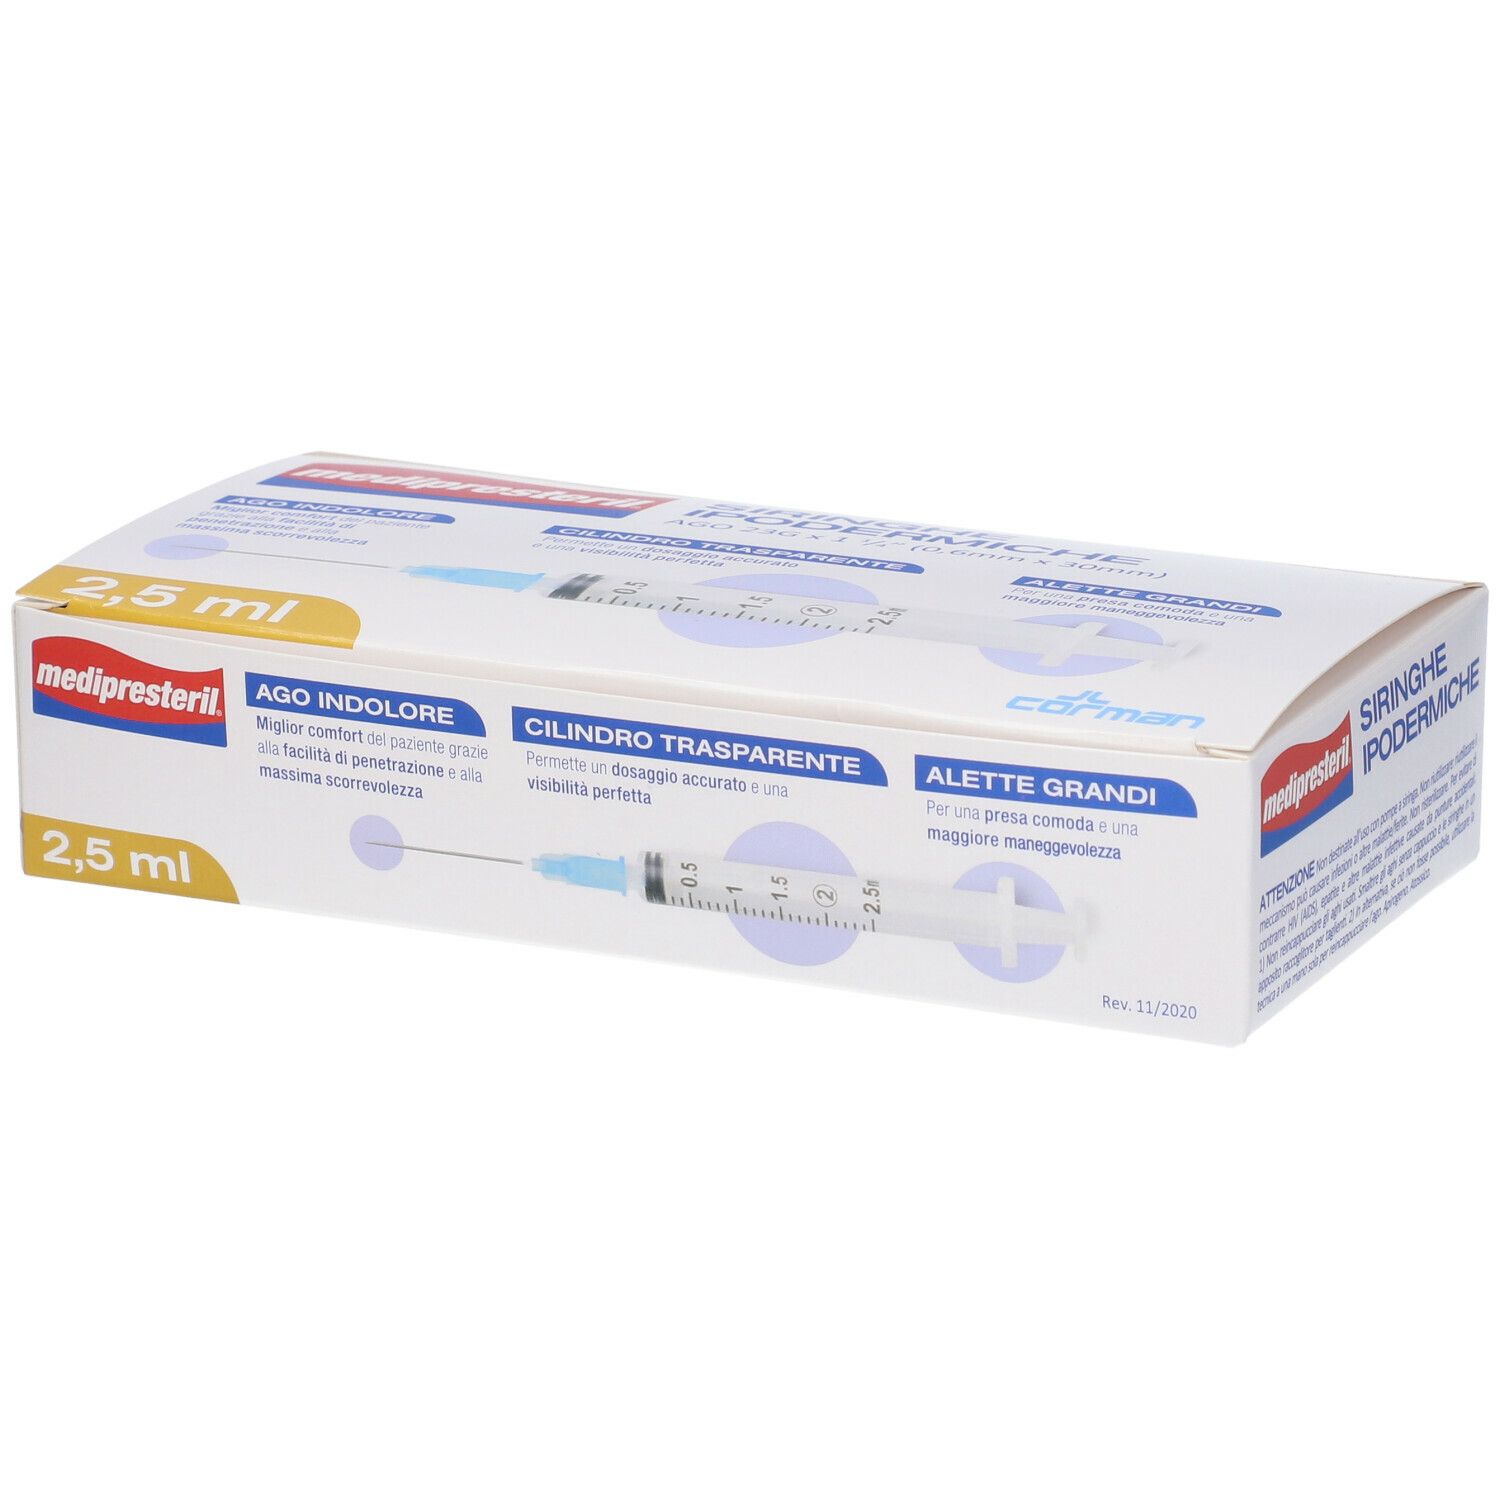 Image of Medipresteril® Siringhe Ipodermiche 2,5 ml